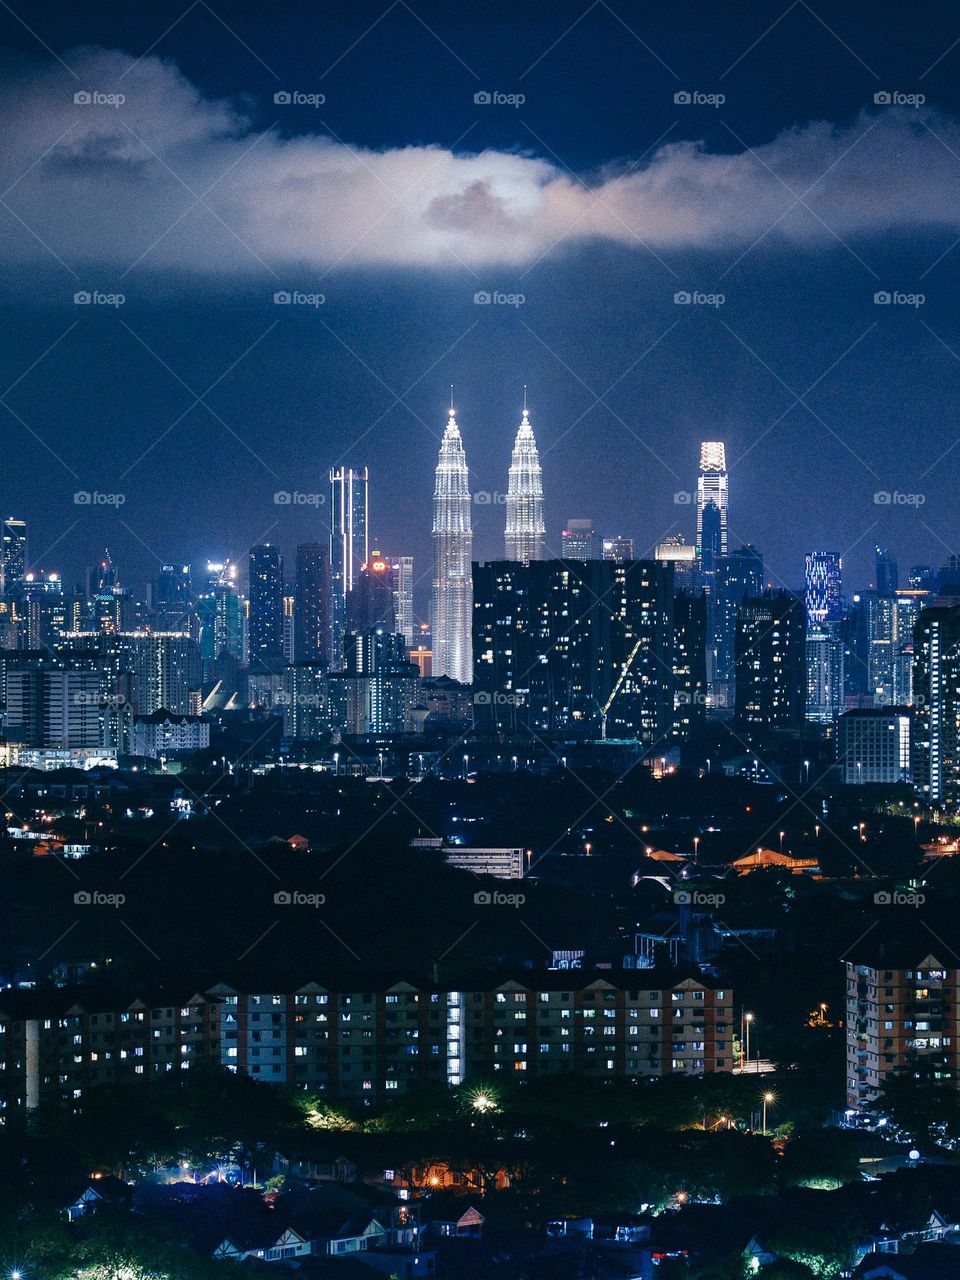 Illuminated clouds above the petronas twin towers in Kuala Lumpur, Malaysia